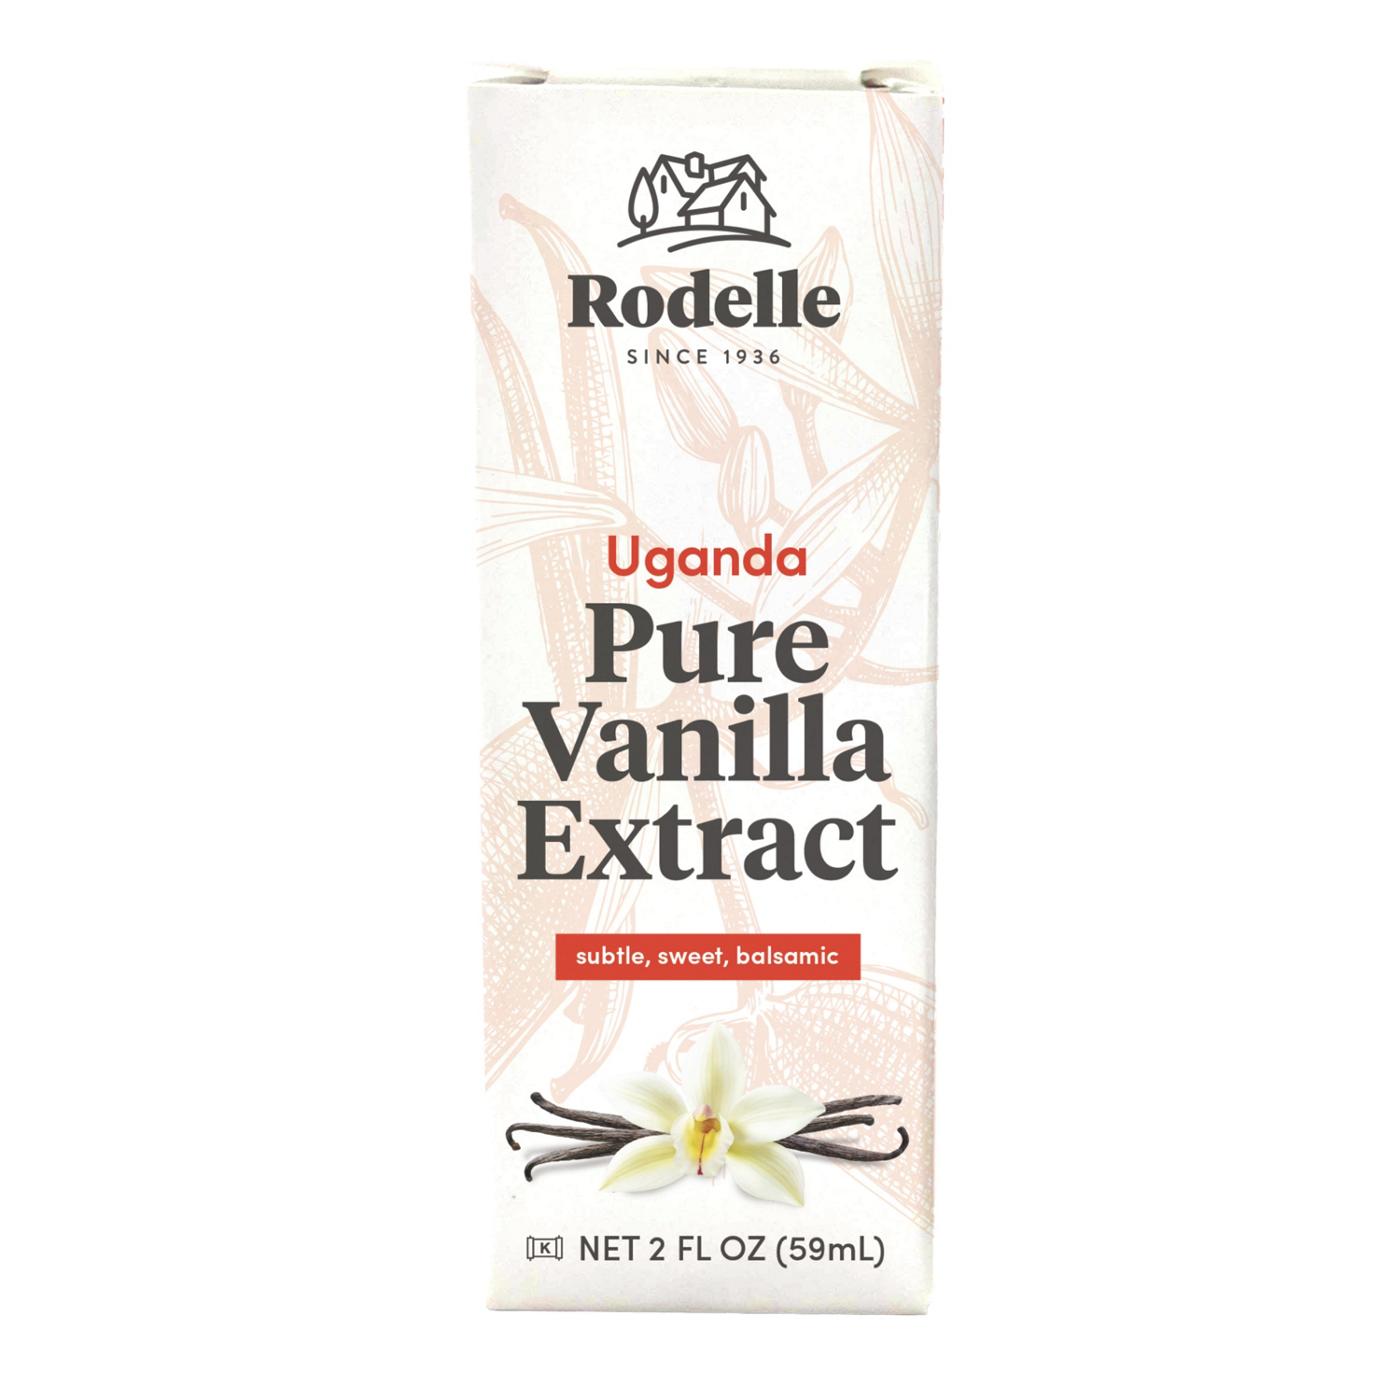 Rodelle Uganda Pure Vanilla Extract; image 1 of 4